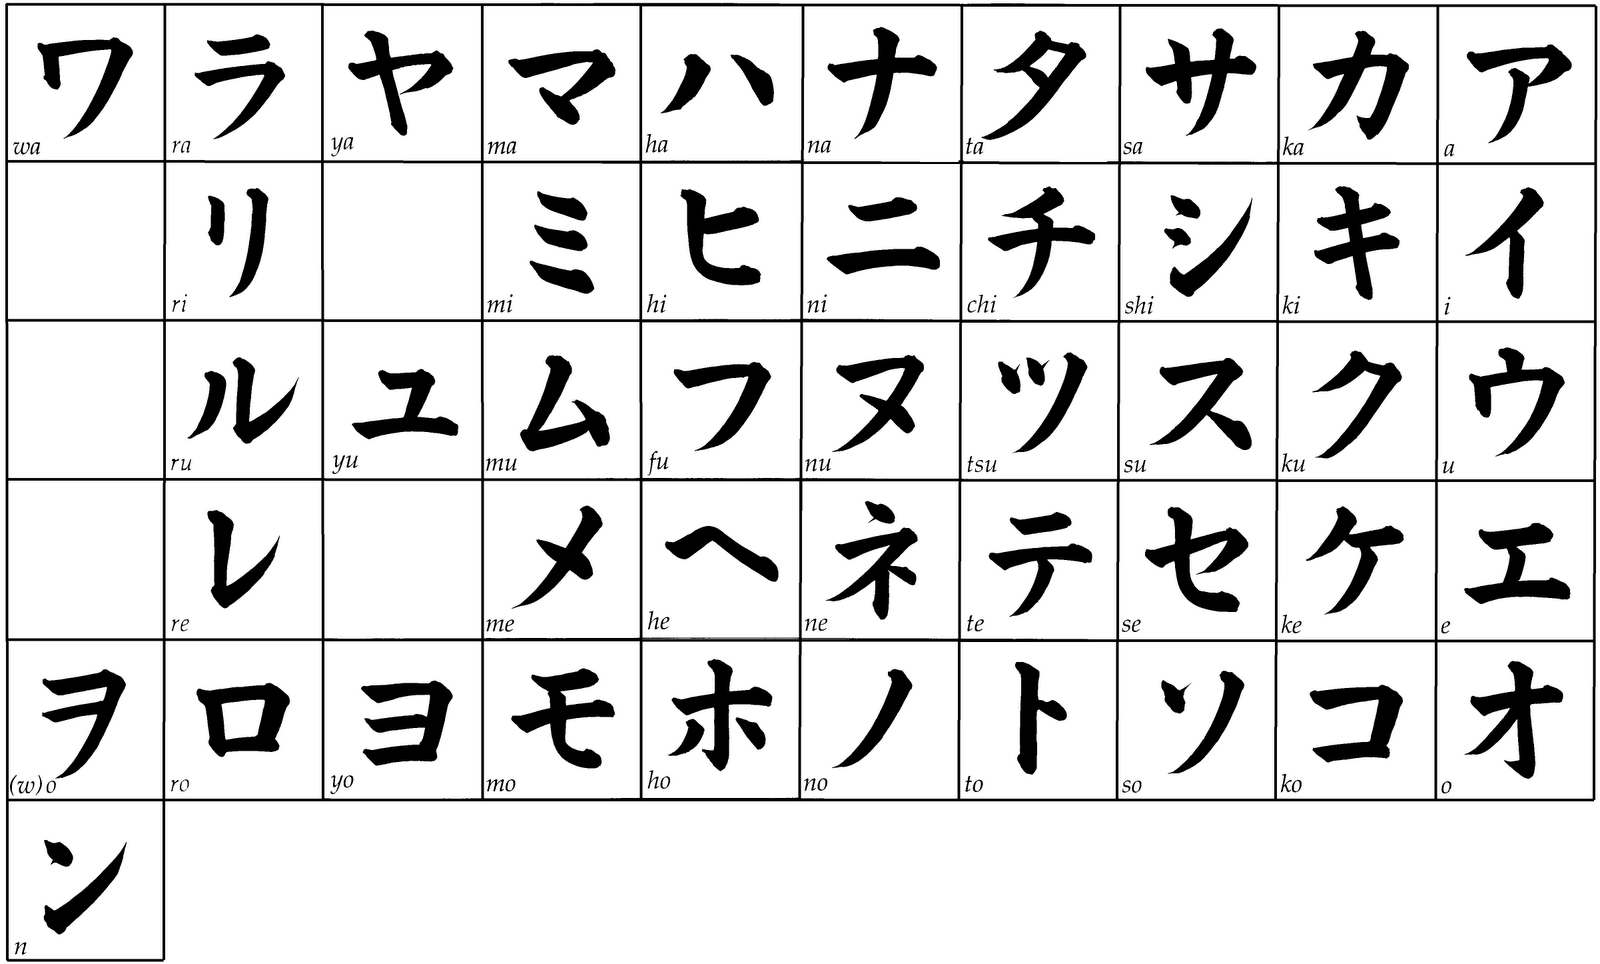 Японский язык знаки. Азбука катакана таблица. Японская письменность катакана. Японская катакана таблица. Японская Азбука катаканы и Хираганы.